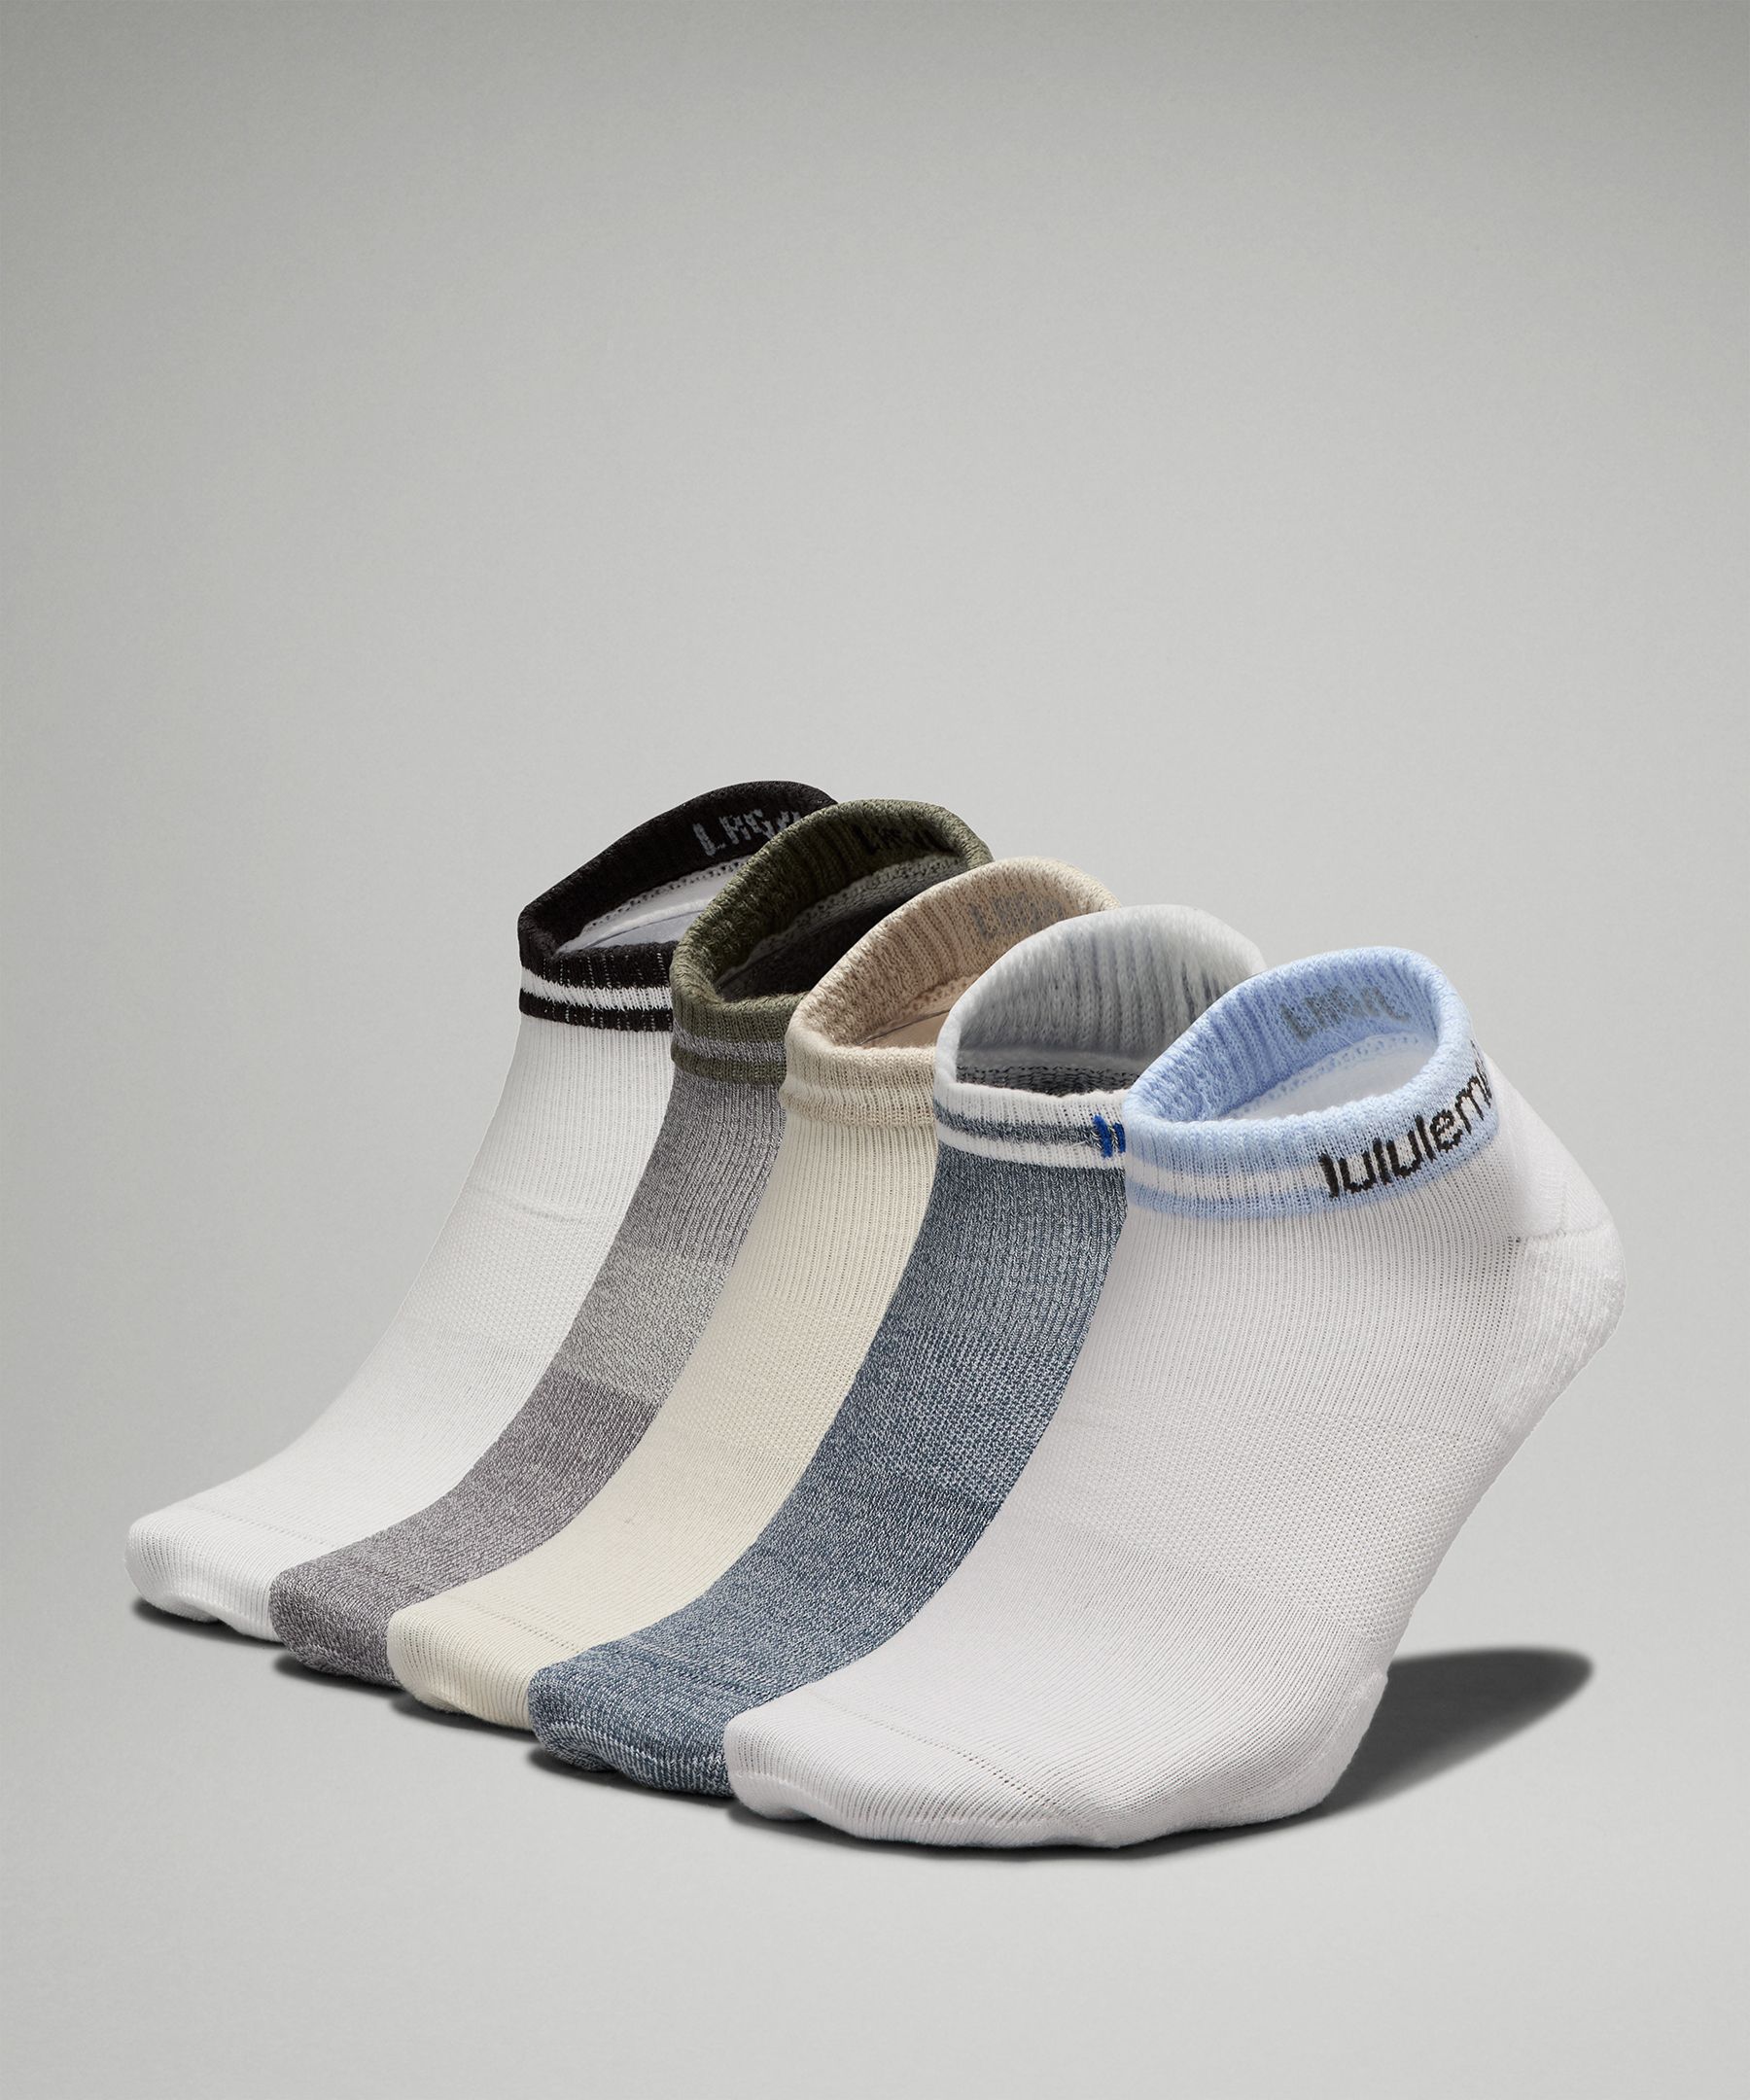 Lululemon Daily Stride Comfort Low-ankle Socks 5 Pack